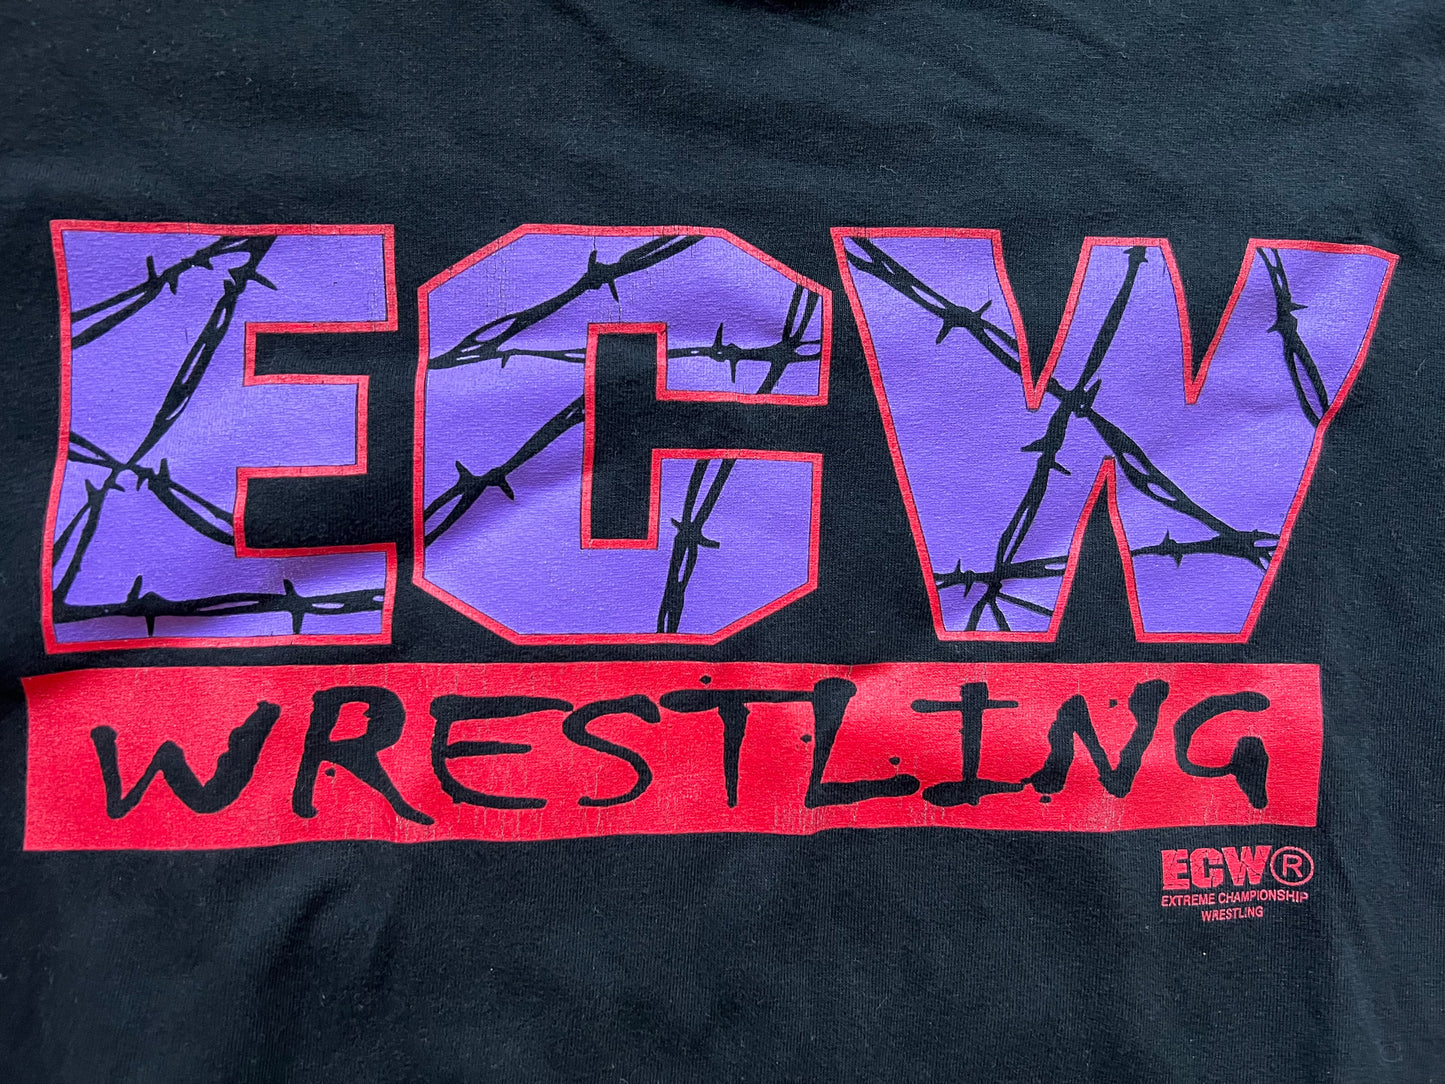 1998 ECW “Let the Ass Kickin Begin” two sided shirt